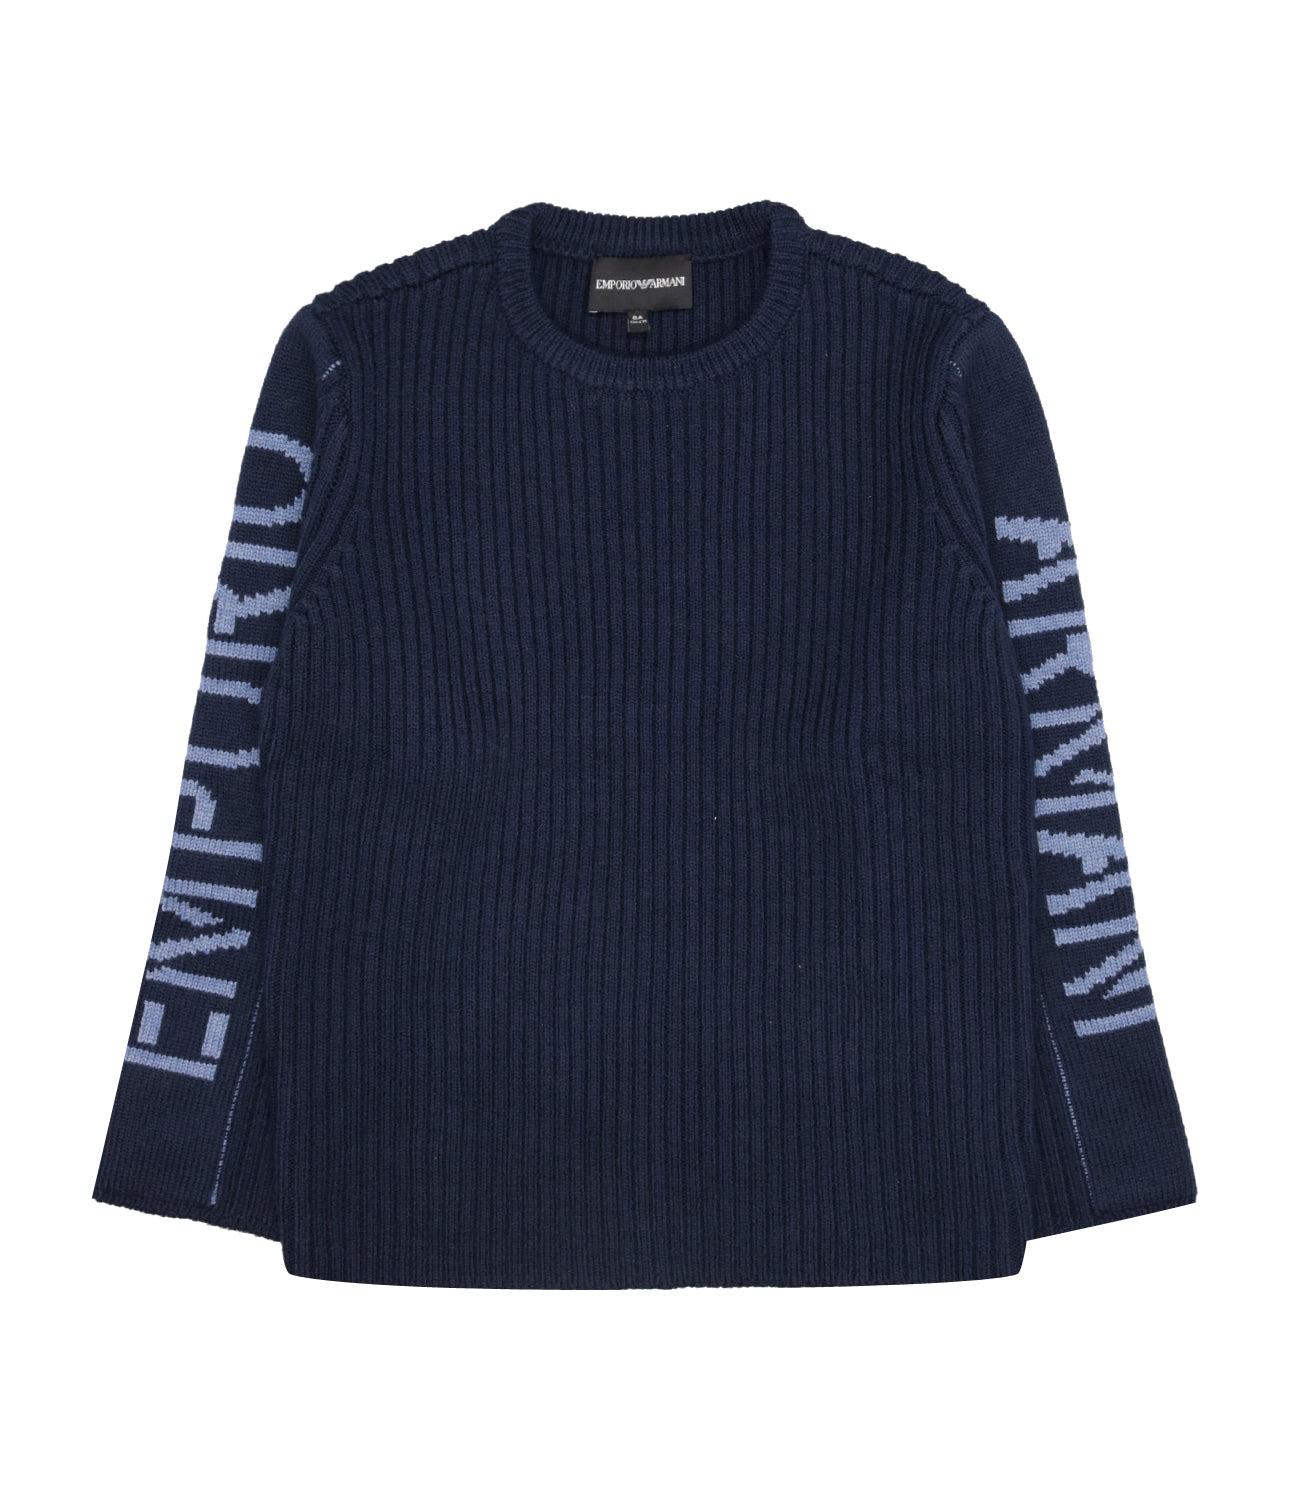 Emporio Armani Junior | Navy Blue Sweater